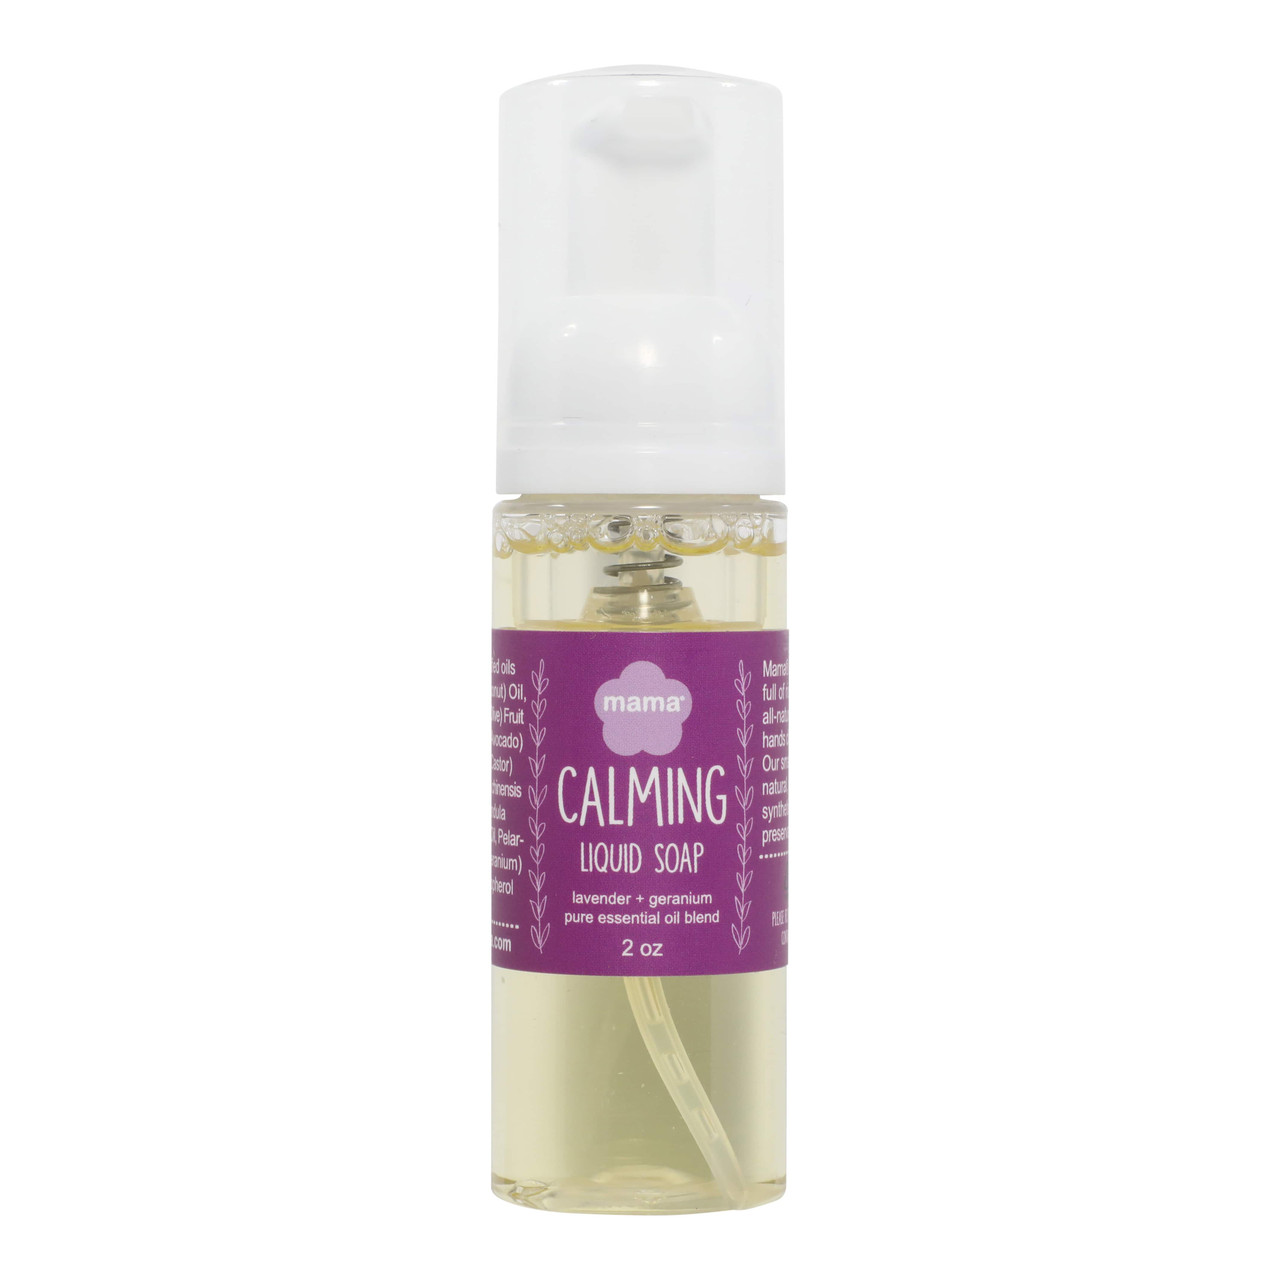 Calming (Lavender + Geranium) Travel Size Liquid Soap | Mama Bath + Body